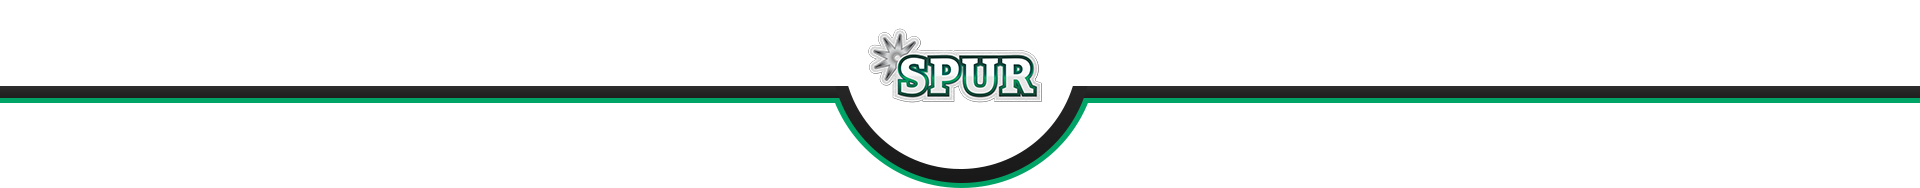 Spur logo transition